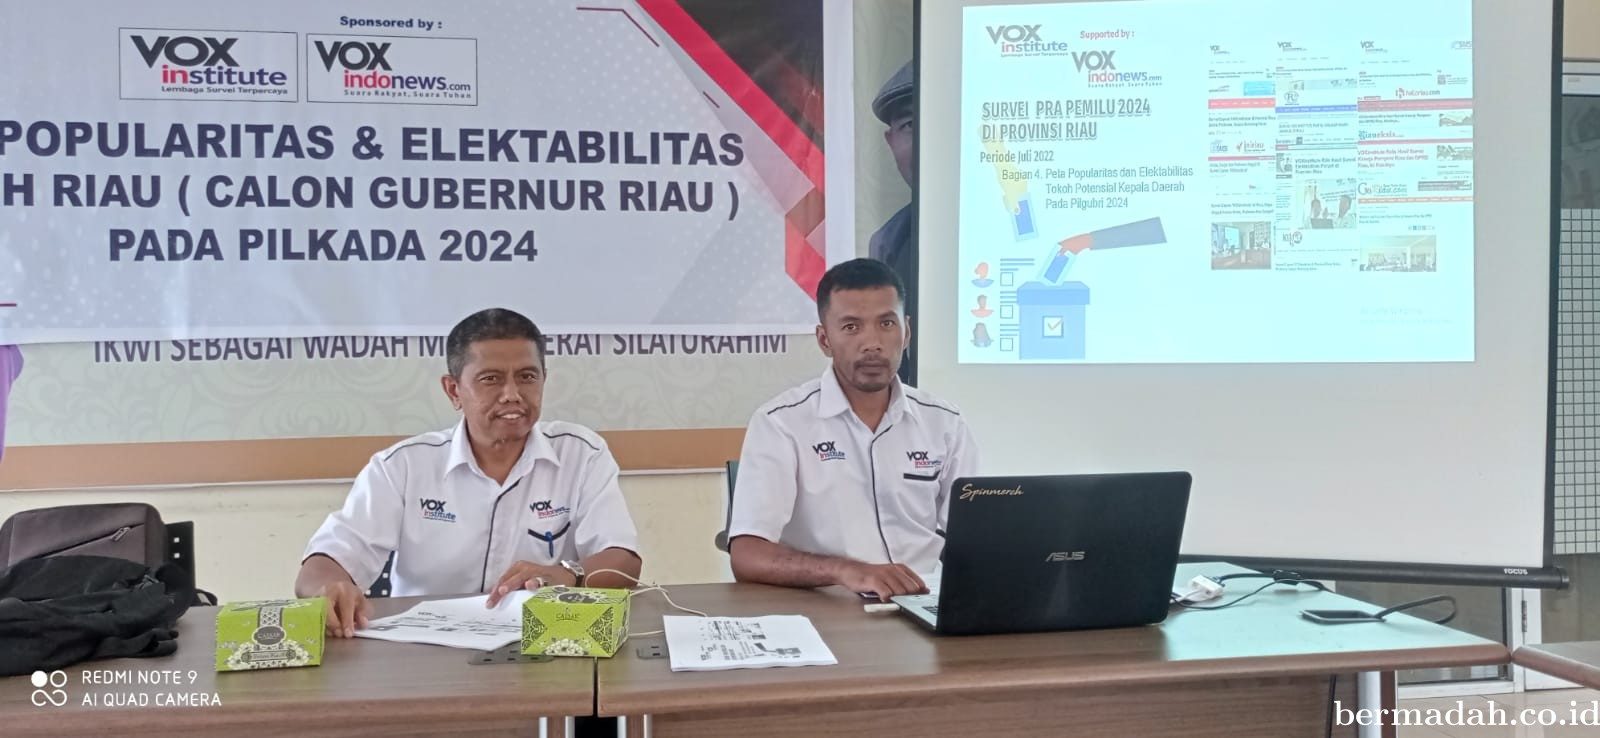 Survei Calon Gubernur Riau VOXinstitute: Syamsuar Tertinggi, Diikuti Edy Natar dan Syamsurizal